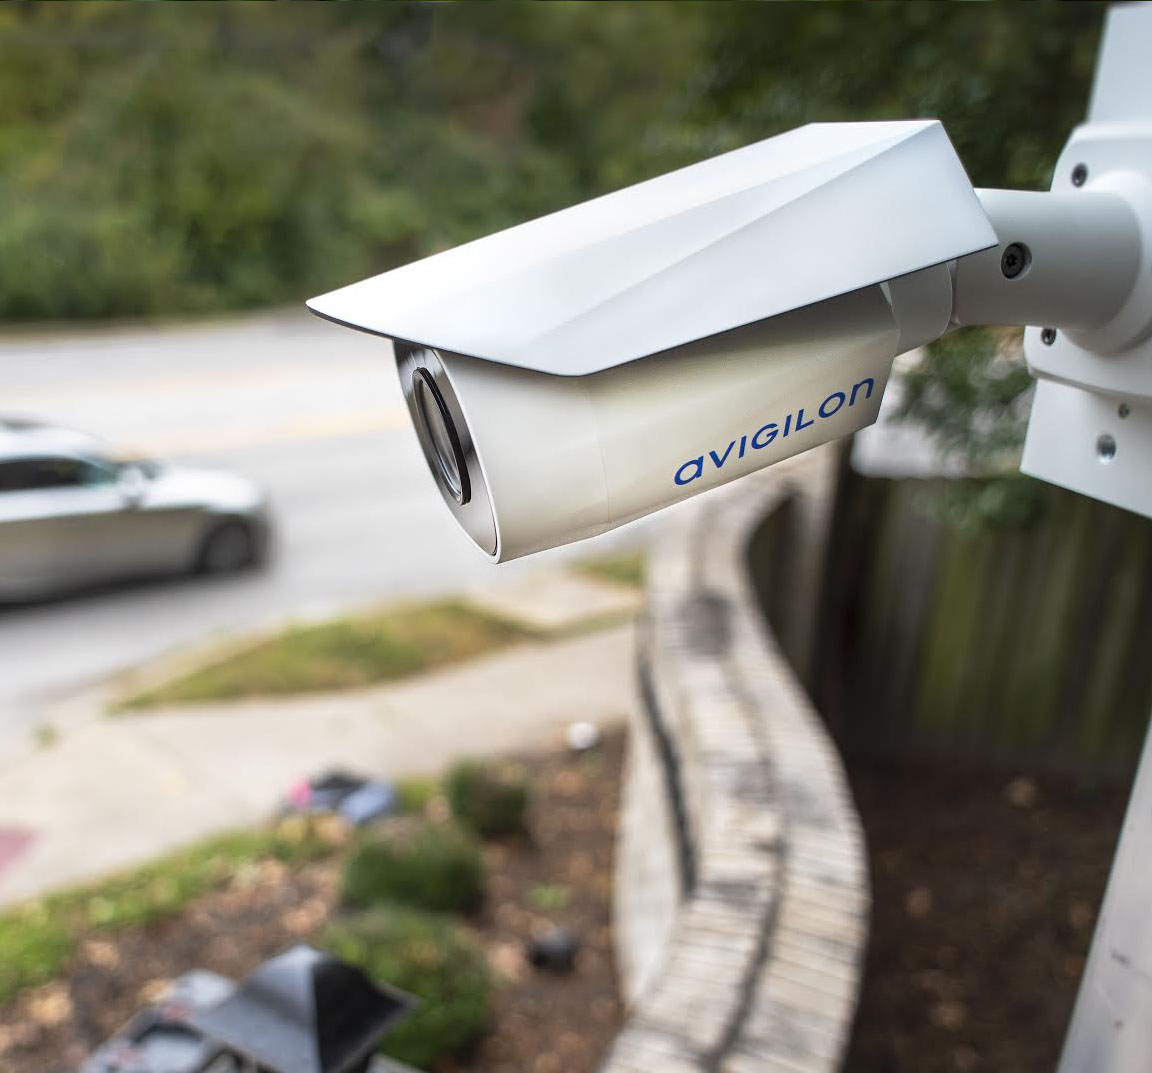 security camera monitoring traffic